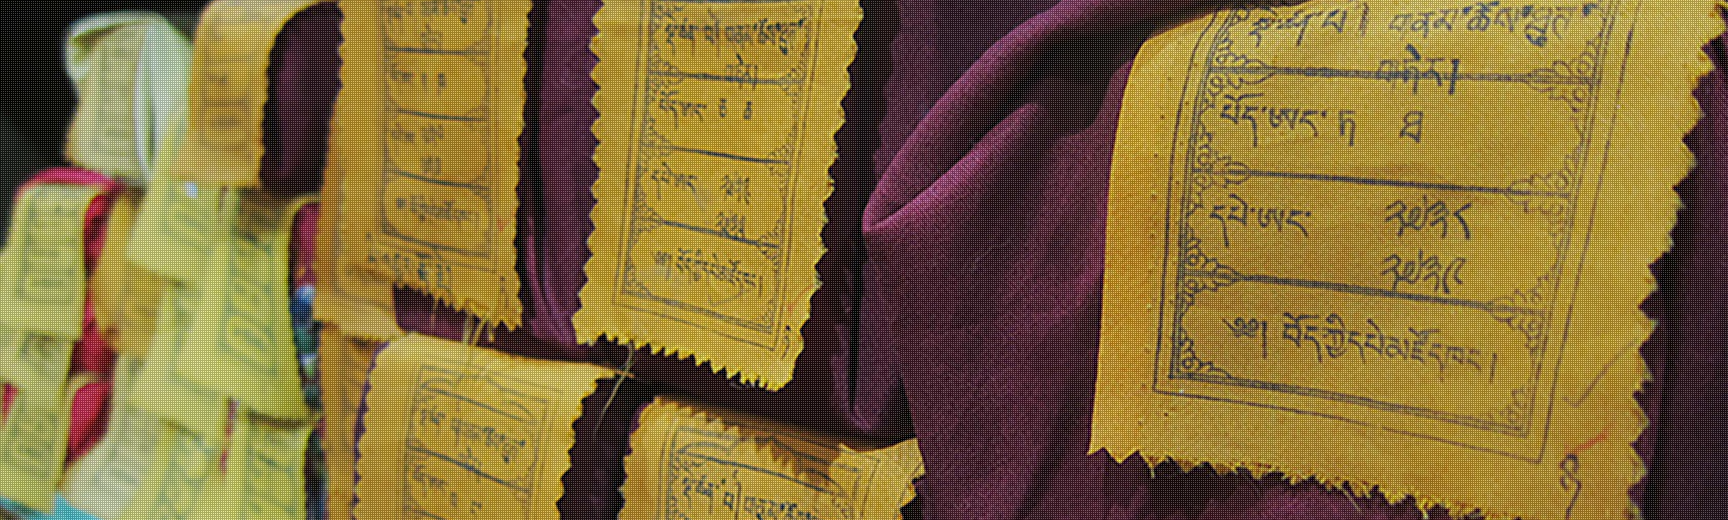 Photograph of Tibetan texts